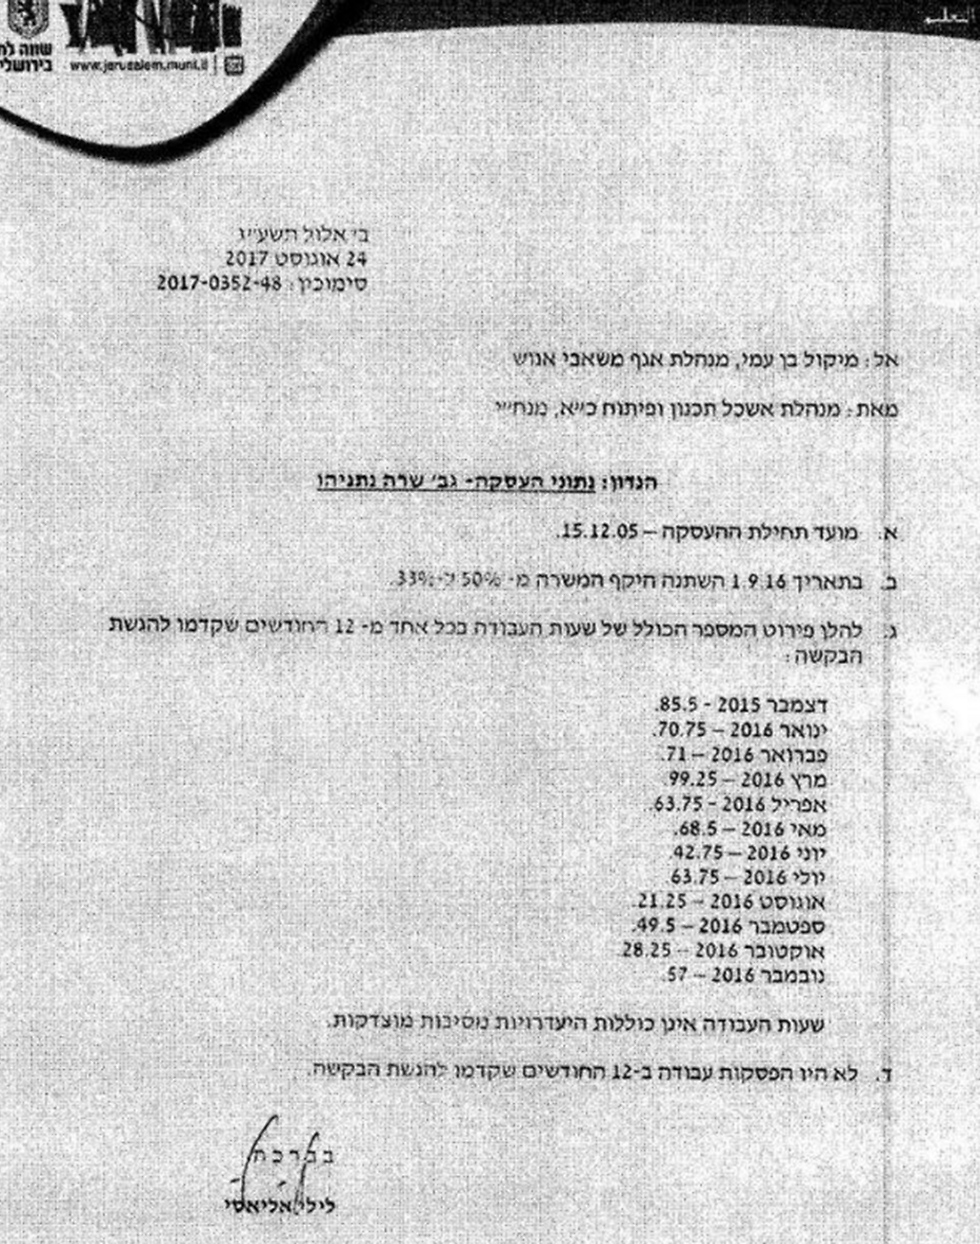 The Jerusalem municipality's document detailing Netanyahu's employment scope